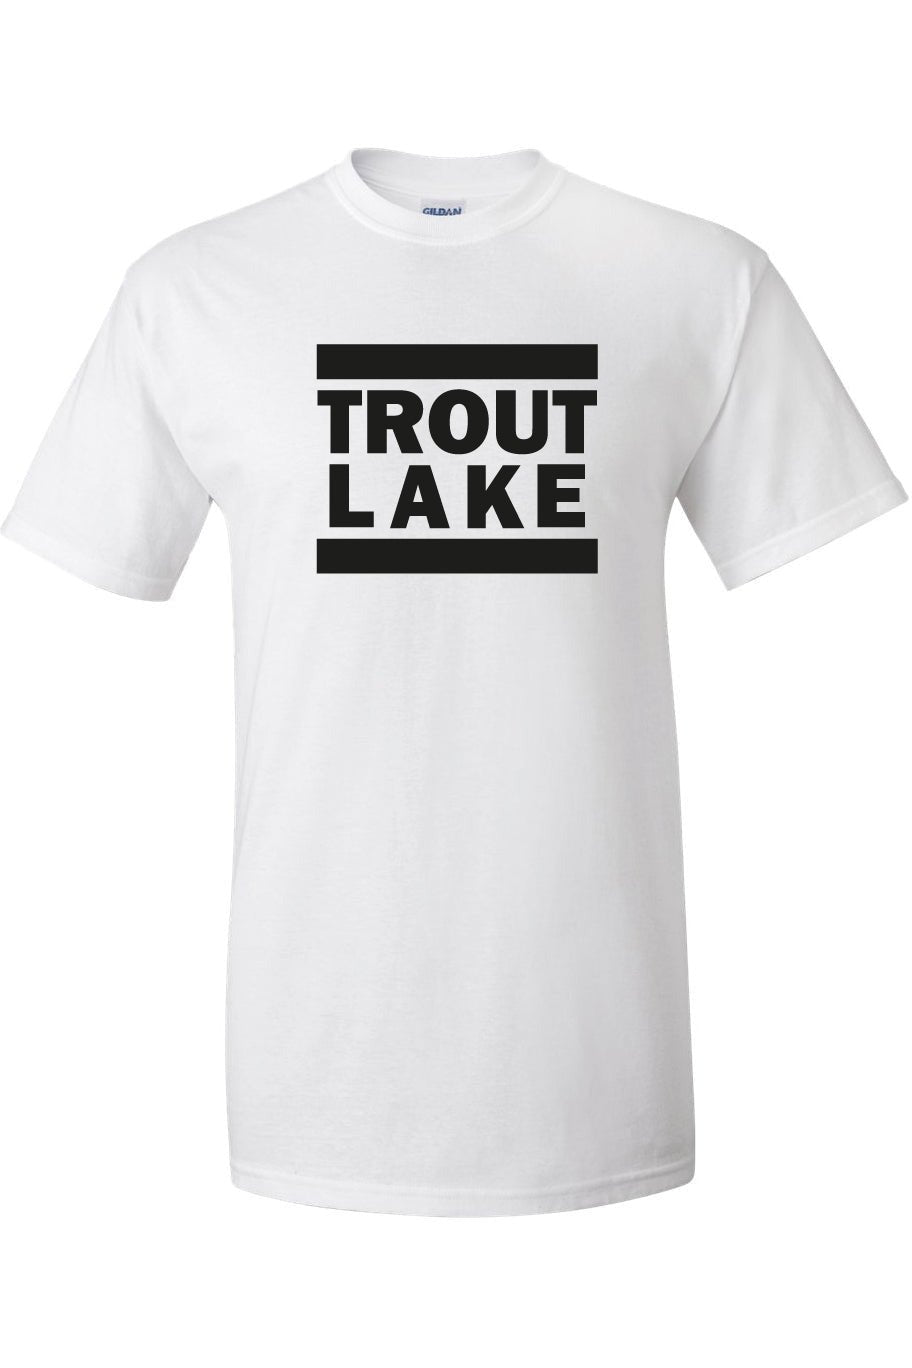 Trout Lake | Short Sleeve T-Shirt (Adult) - Oddball Workshop